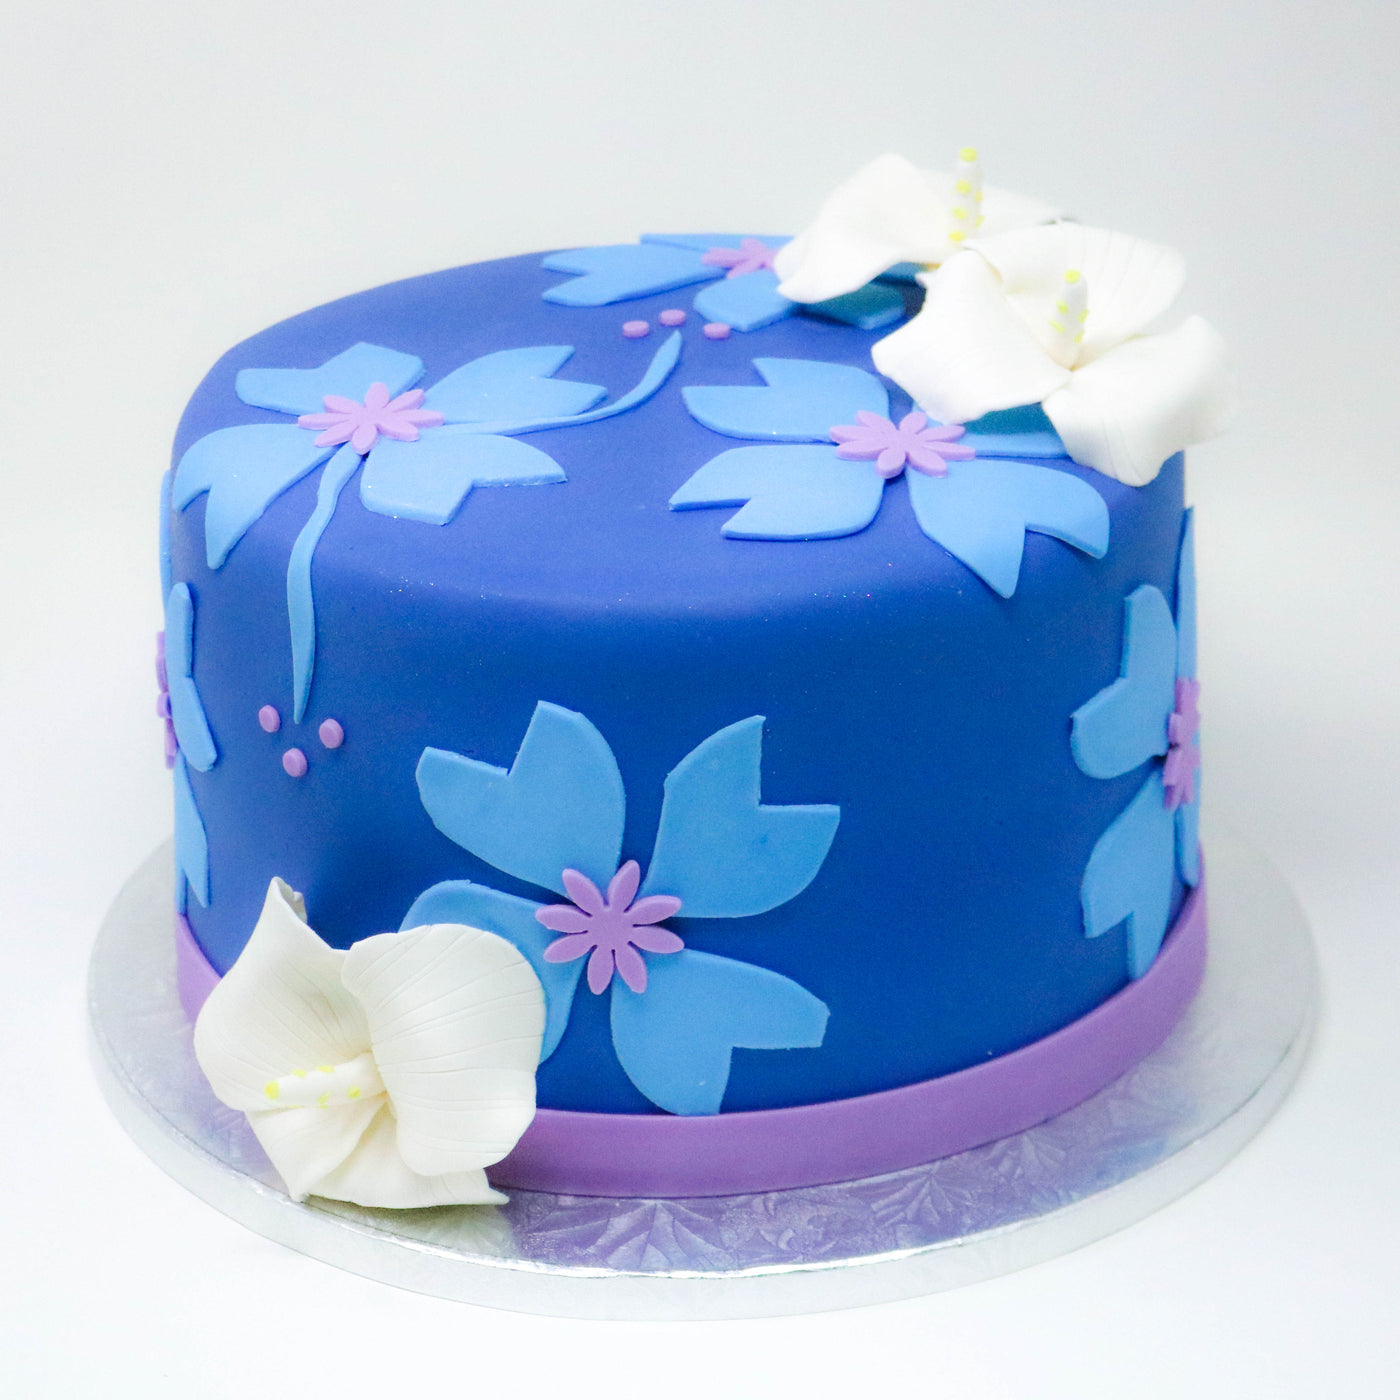 Lilo & Stitch inspired cake